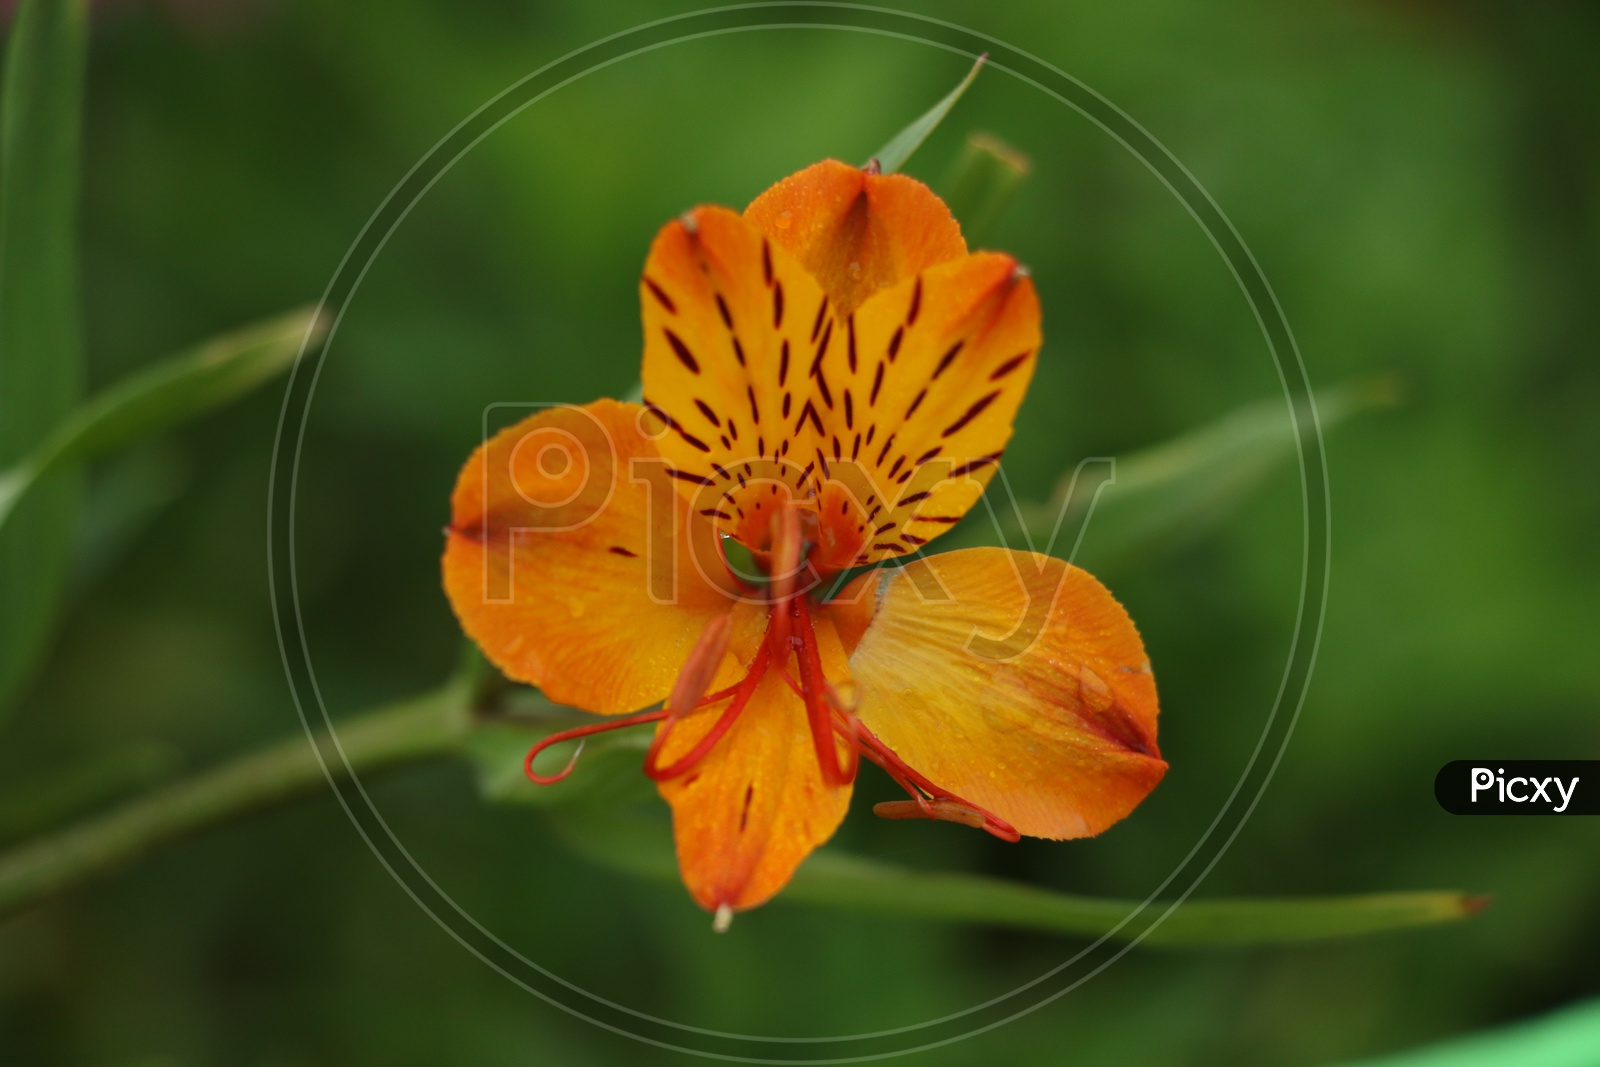 Peruvian Lily Flower Closeup Shot